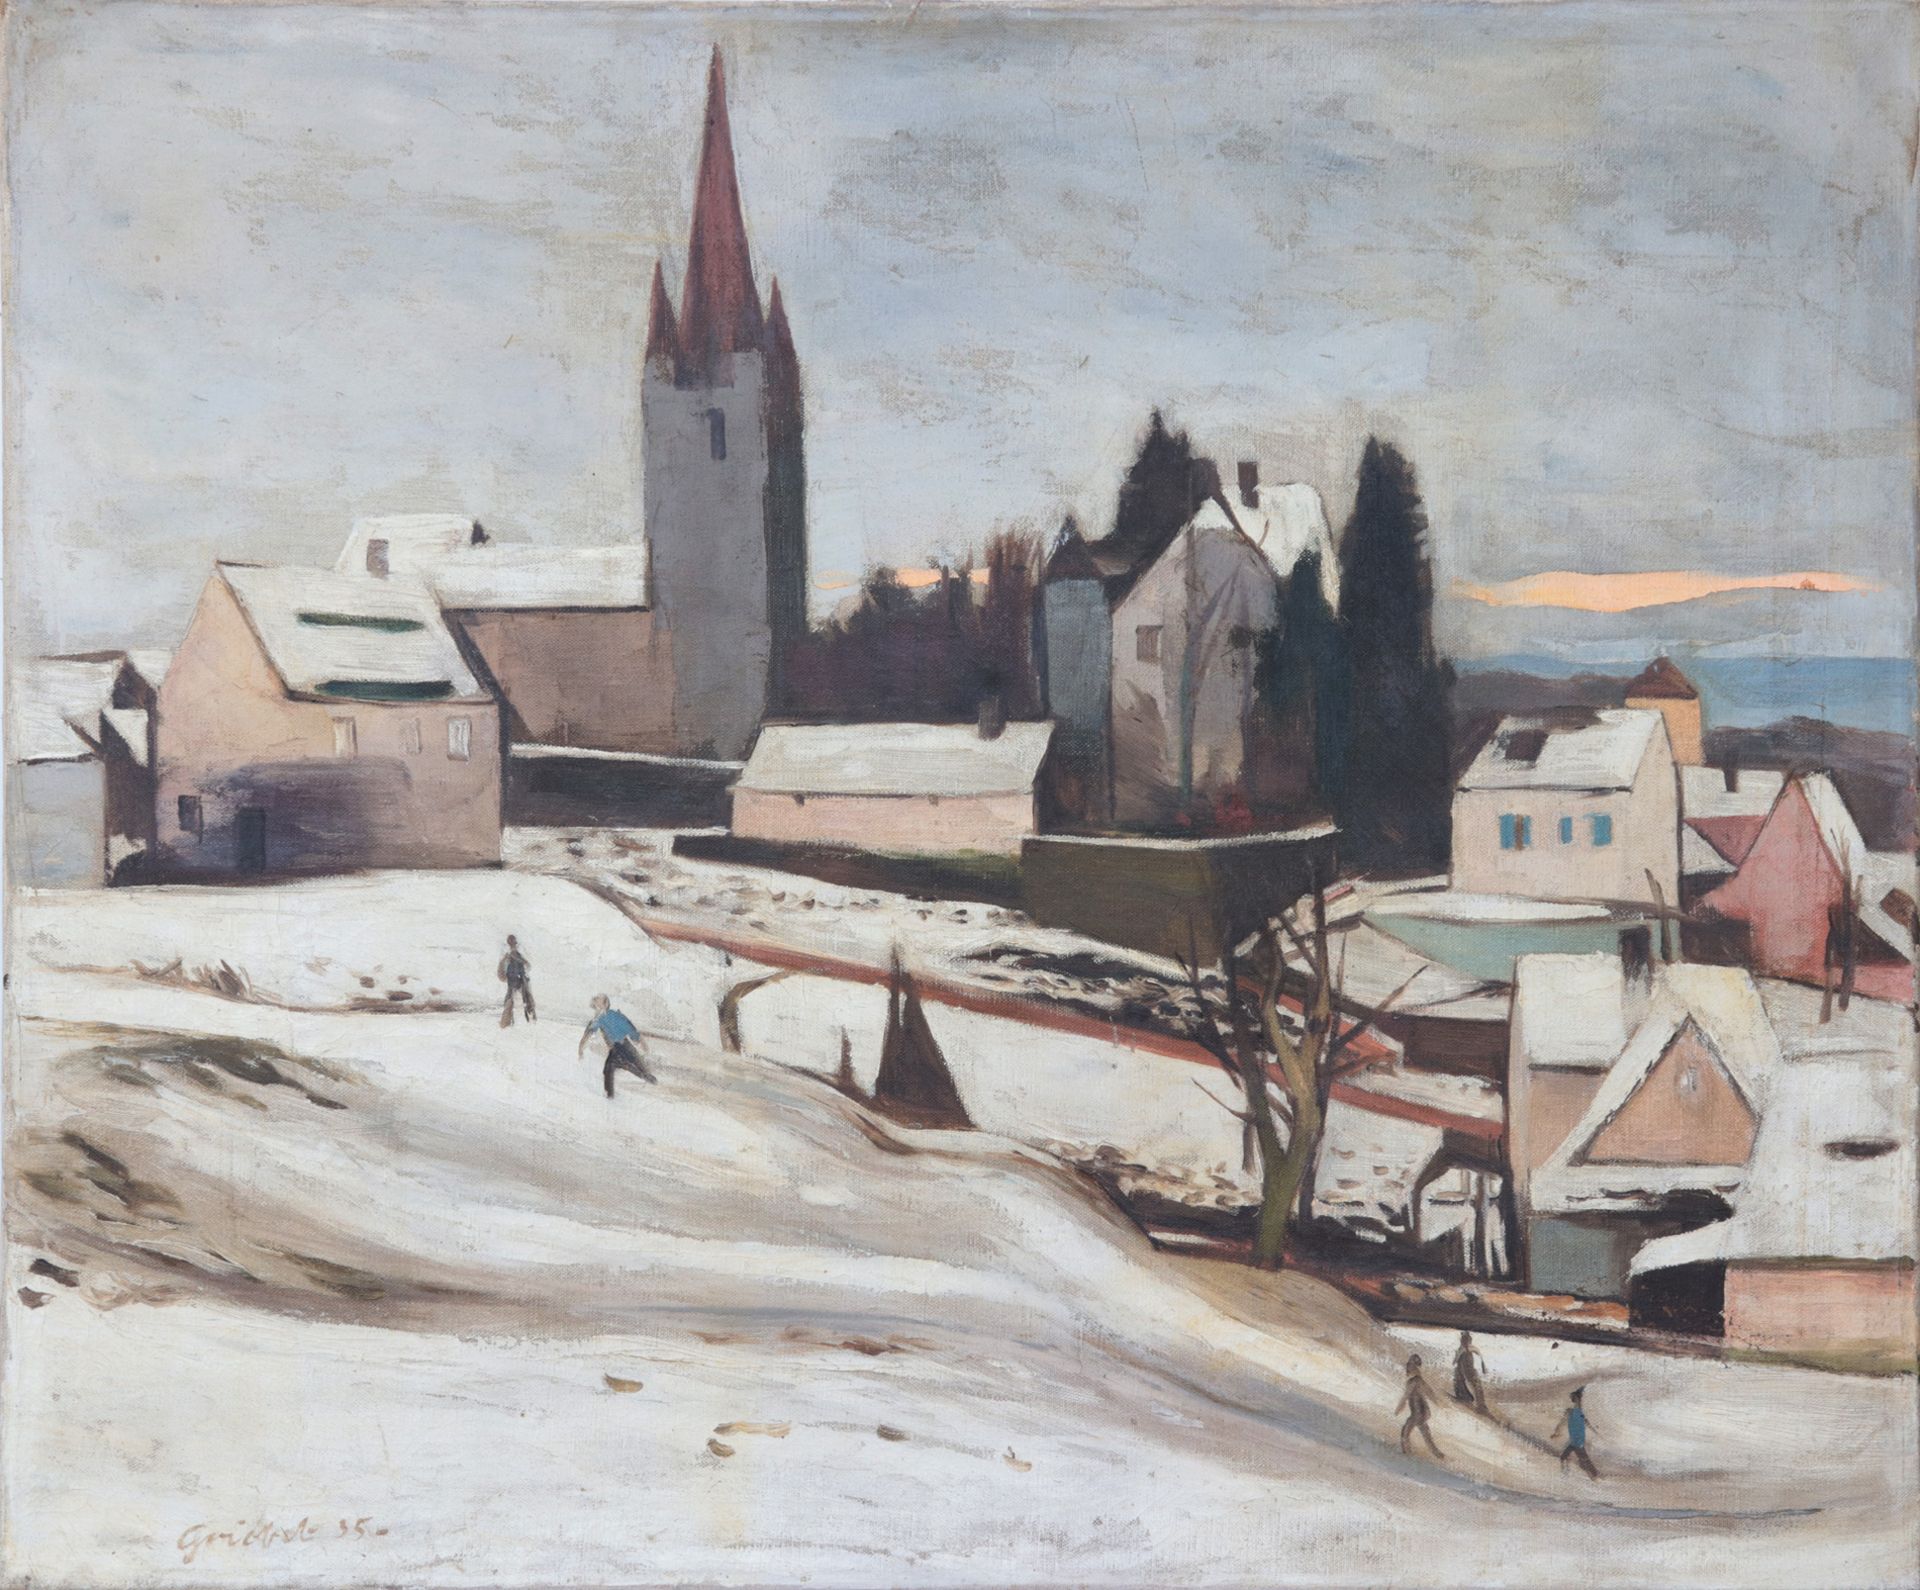 Griebel, Fritz 1899 Unfinden -1976 Heroldsberg, „Blick auf Heroldsberg im Winter“,